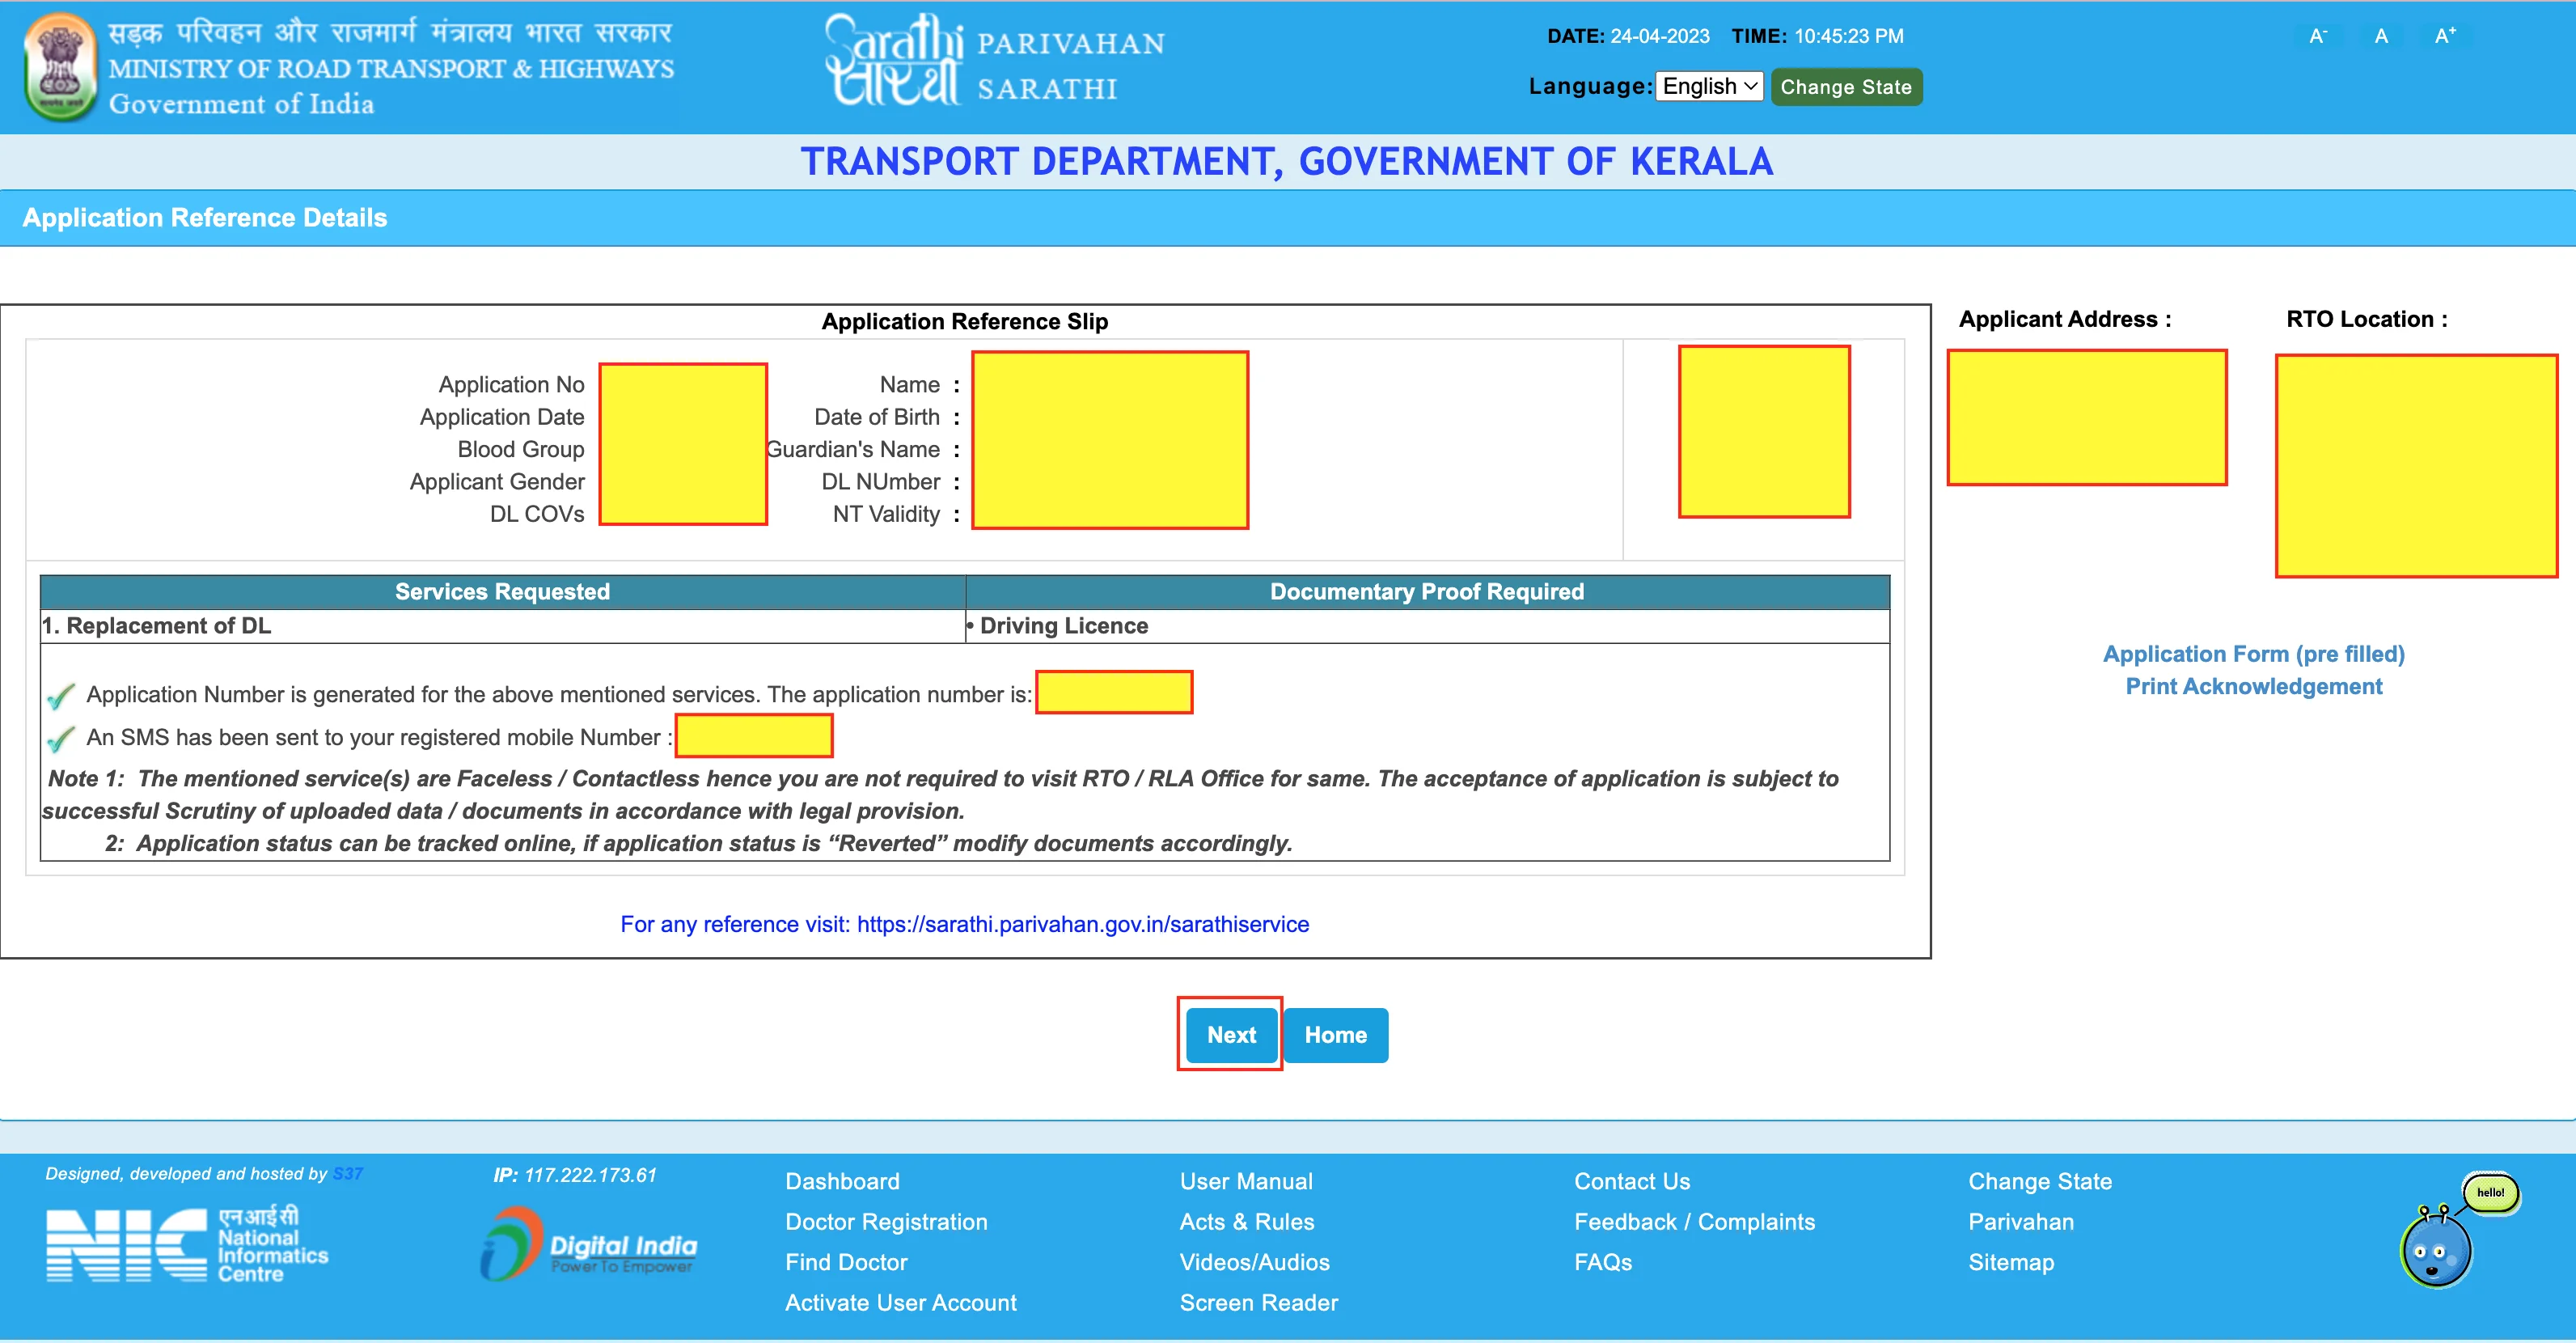 Kerala new smart license card online - Whatnewtrends